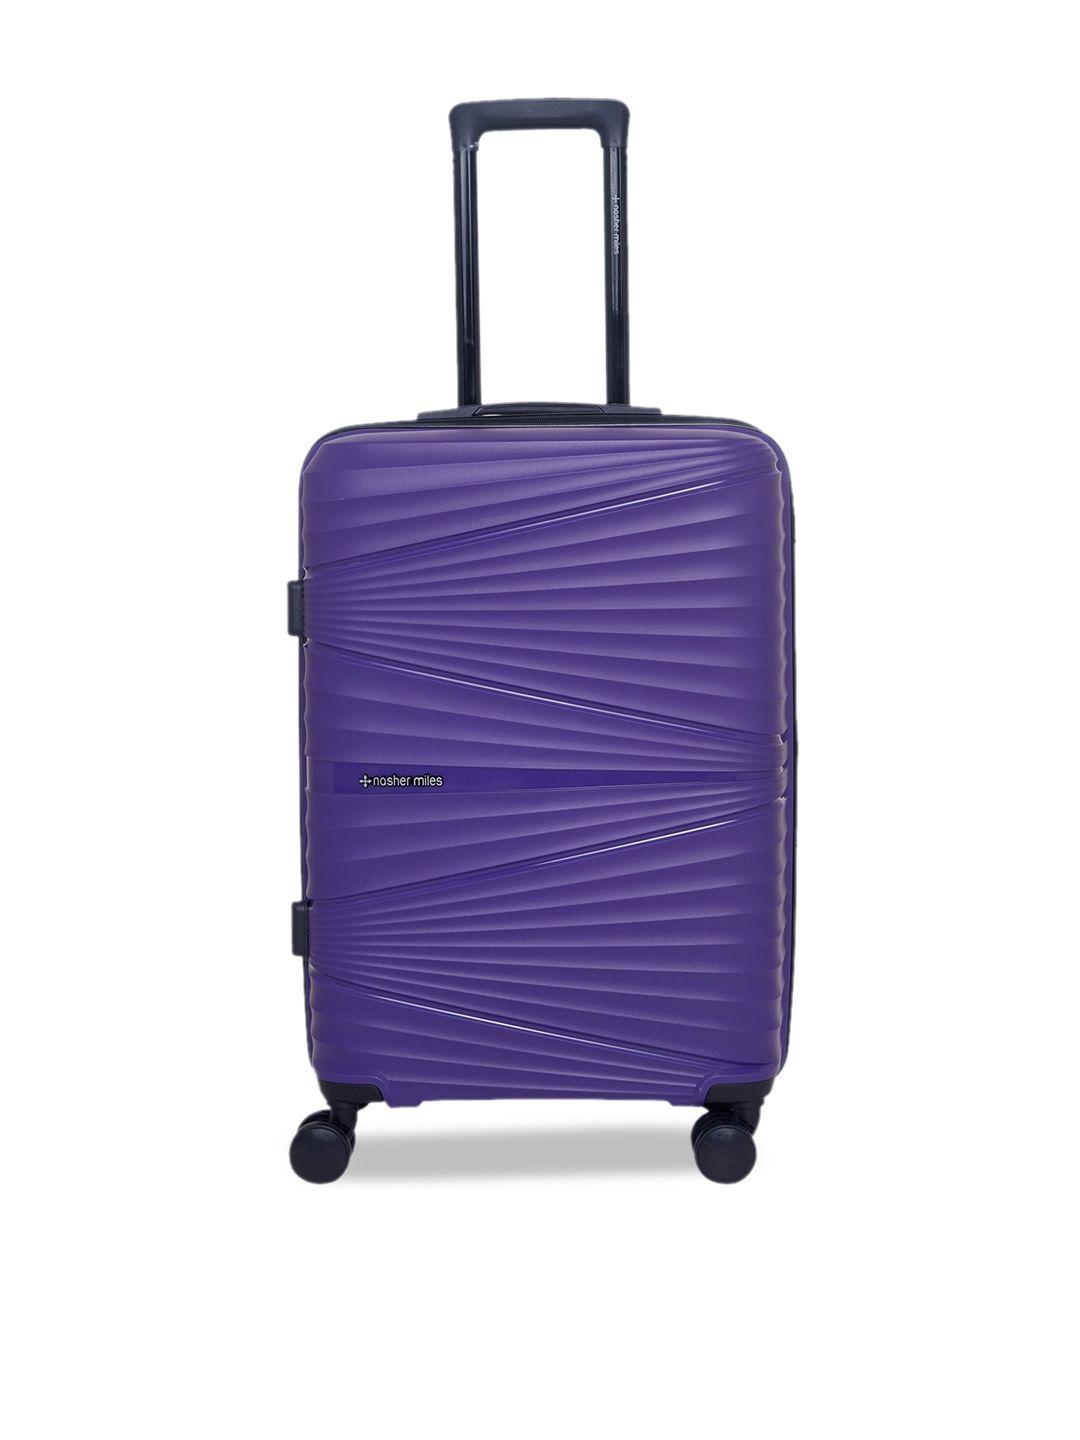 nasher miles purple textured hard-sided medium trolley bag